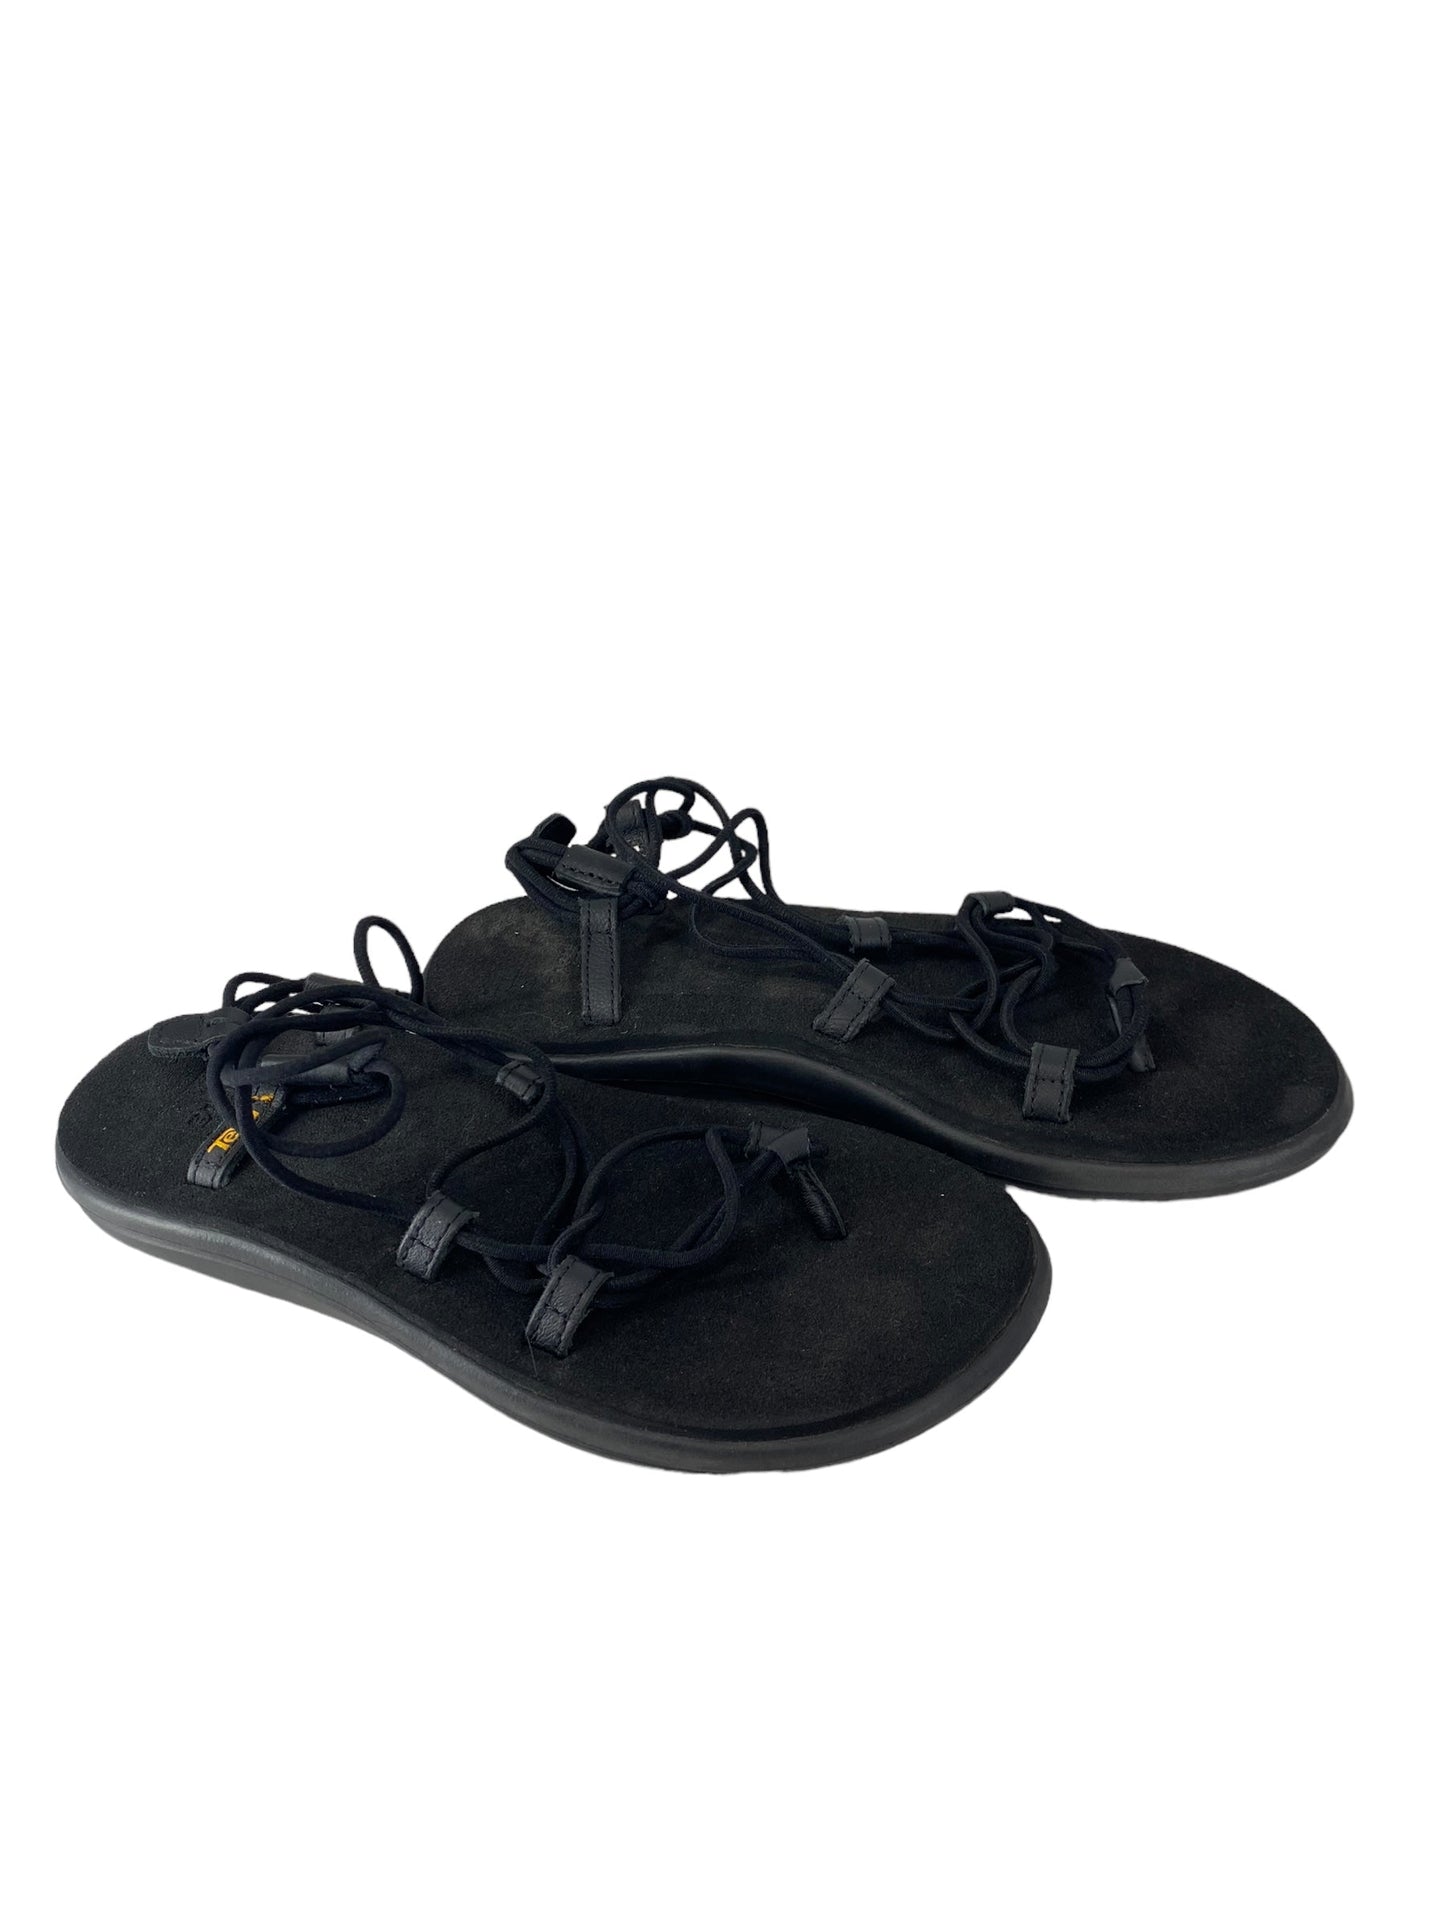 Black Sandals Flats Teva, Size 8